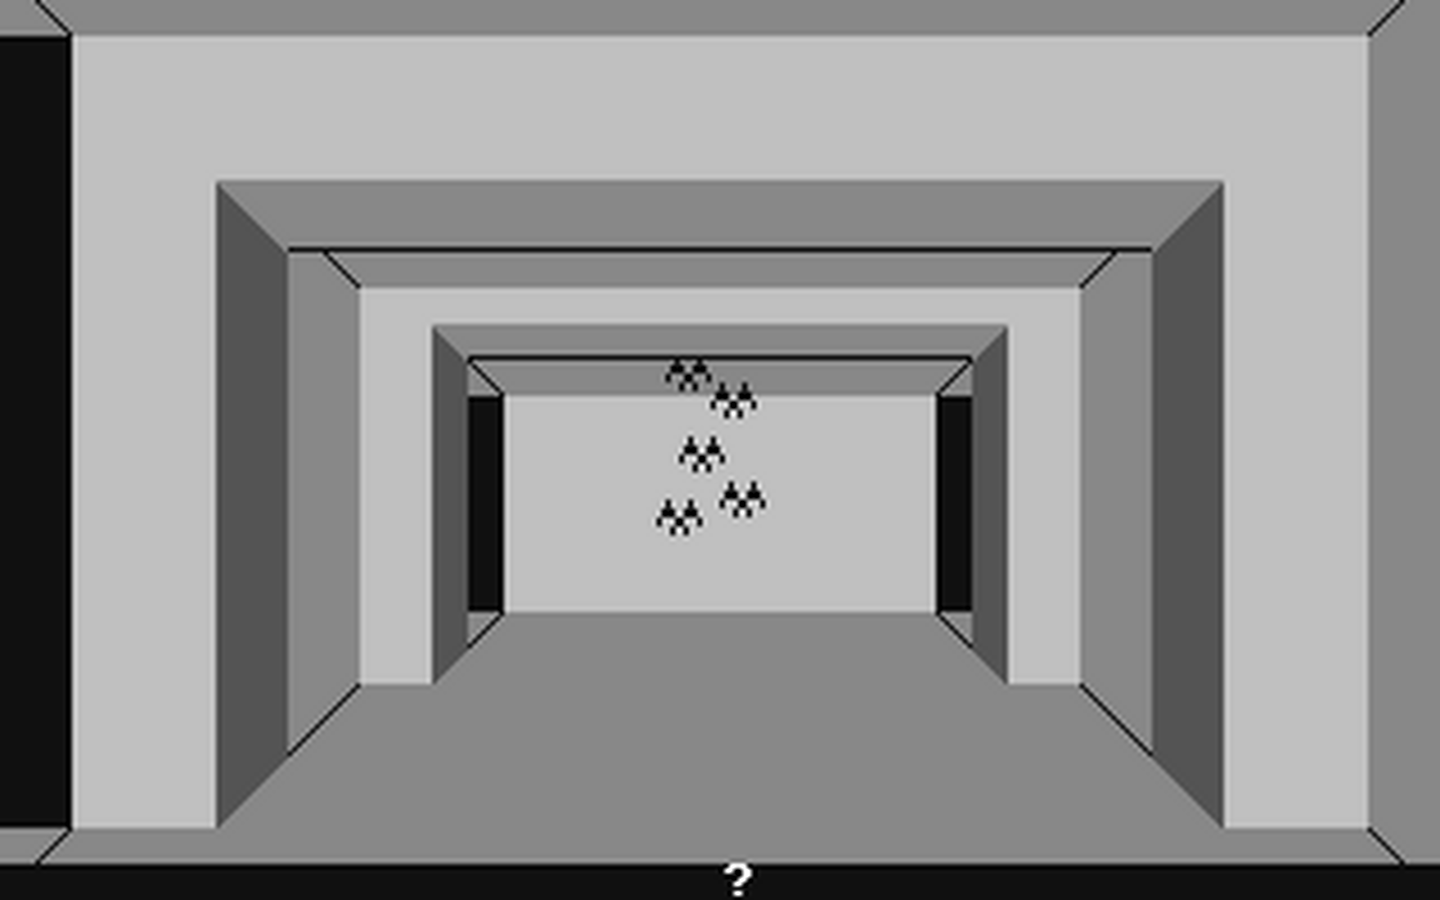 C64 GameBase Tomb_of_Horror Ahoy!/Ion_International,_Inc. 1988